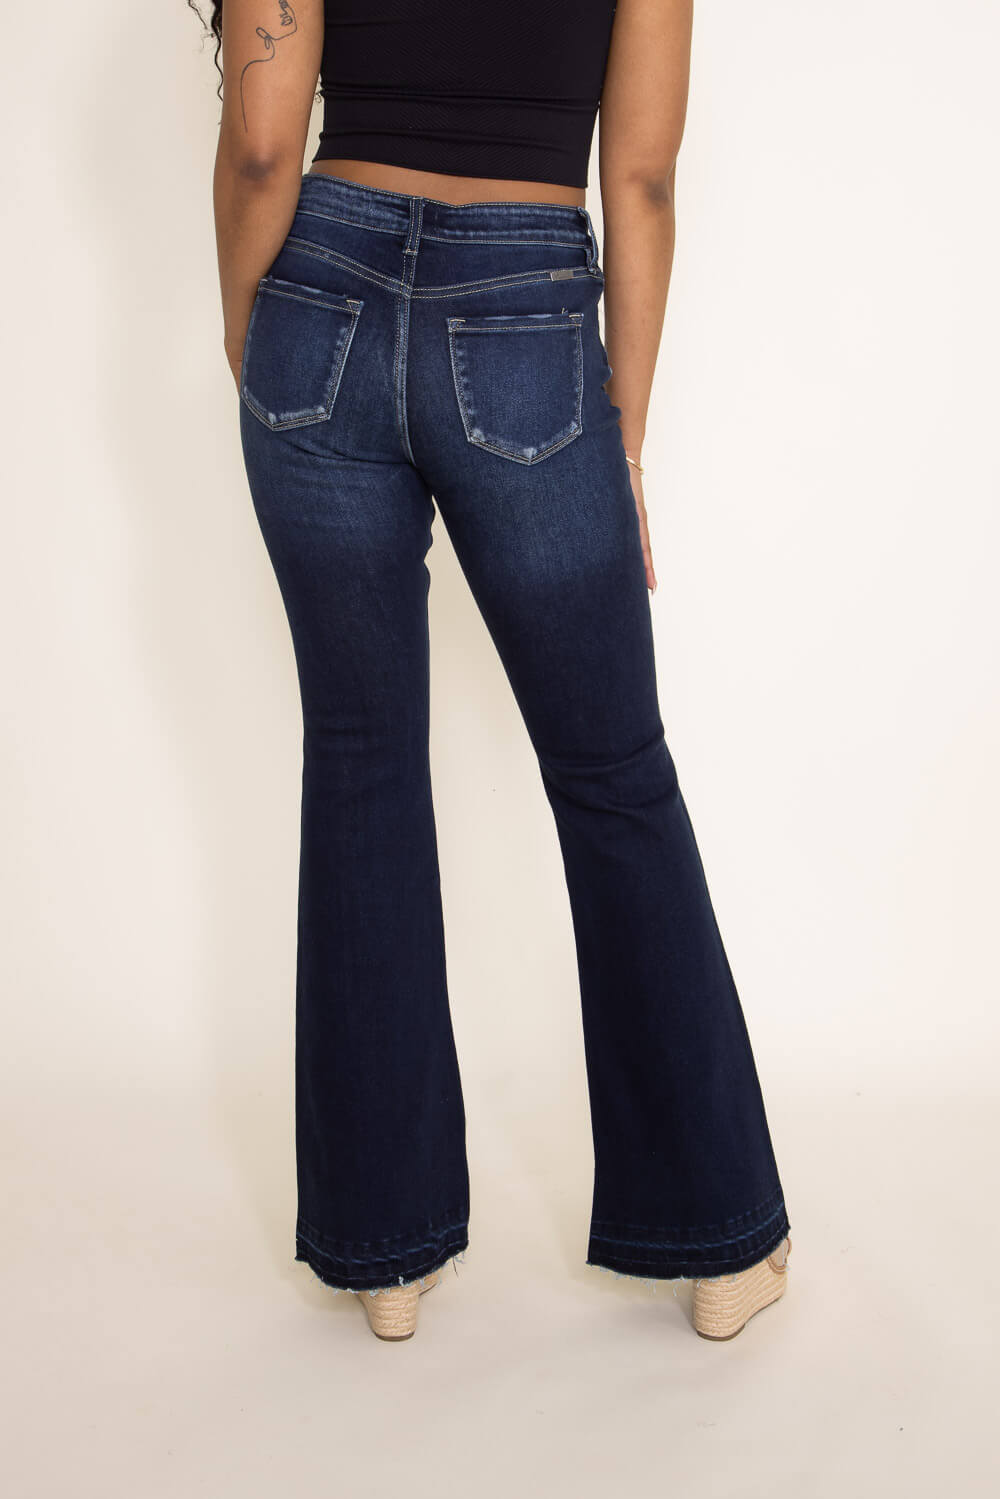 KanCan Mid-Rise Button Fly Flare Jeans for Women | KC7338LD – Glik's